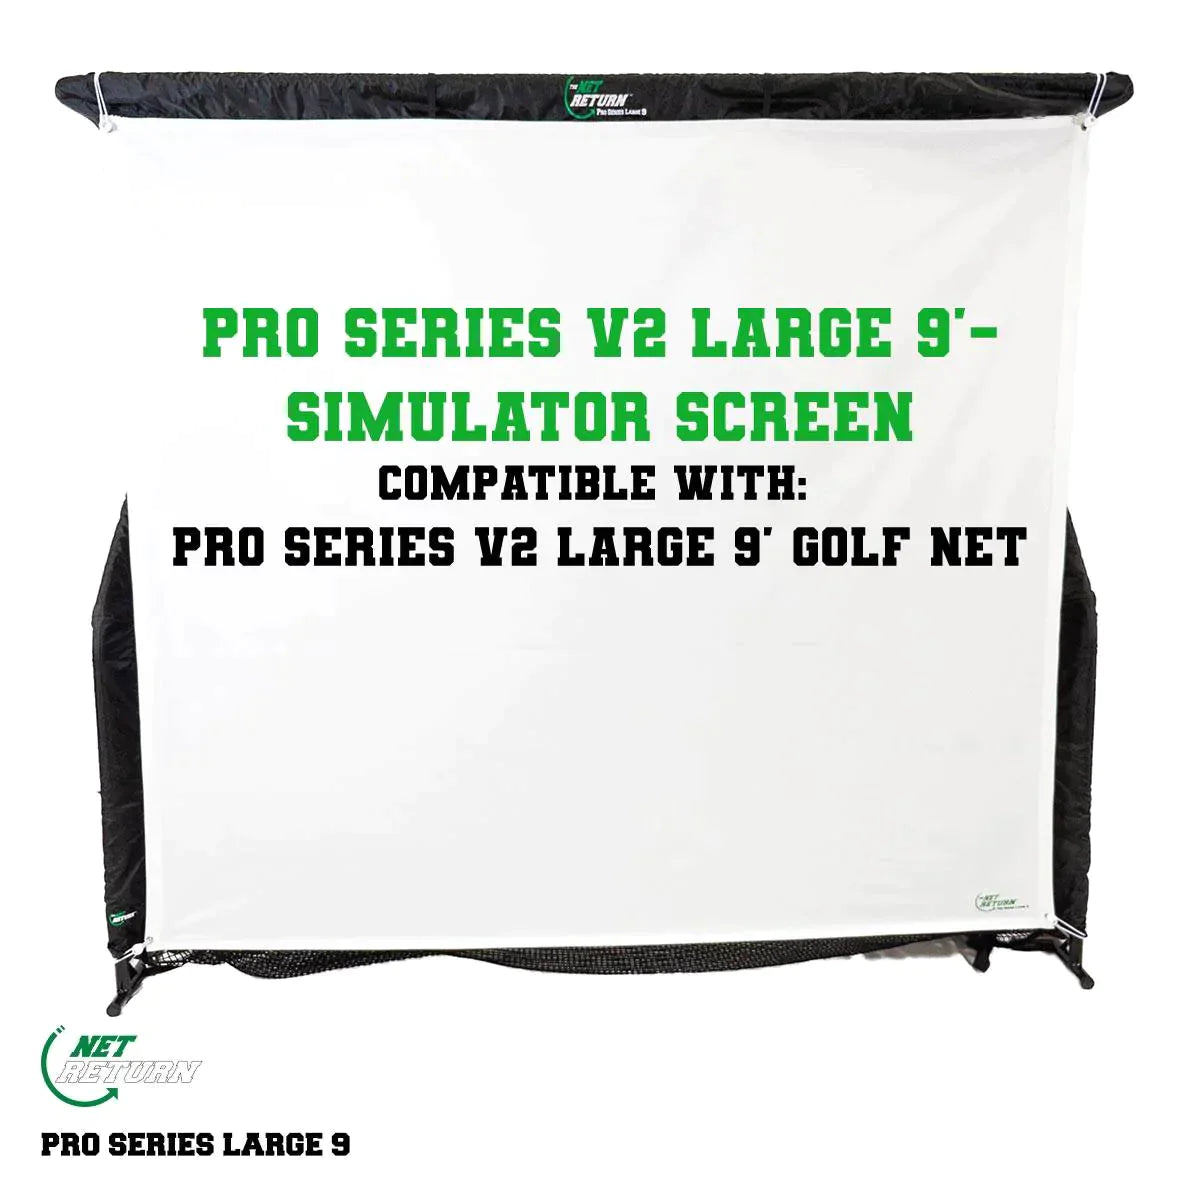 Pro Series V2 Large 9 Simulator Screen